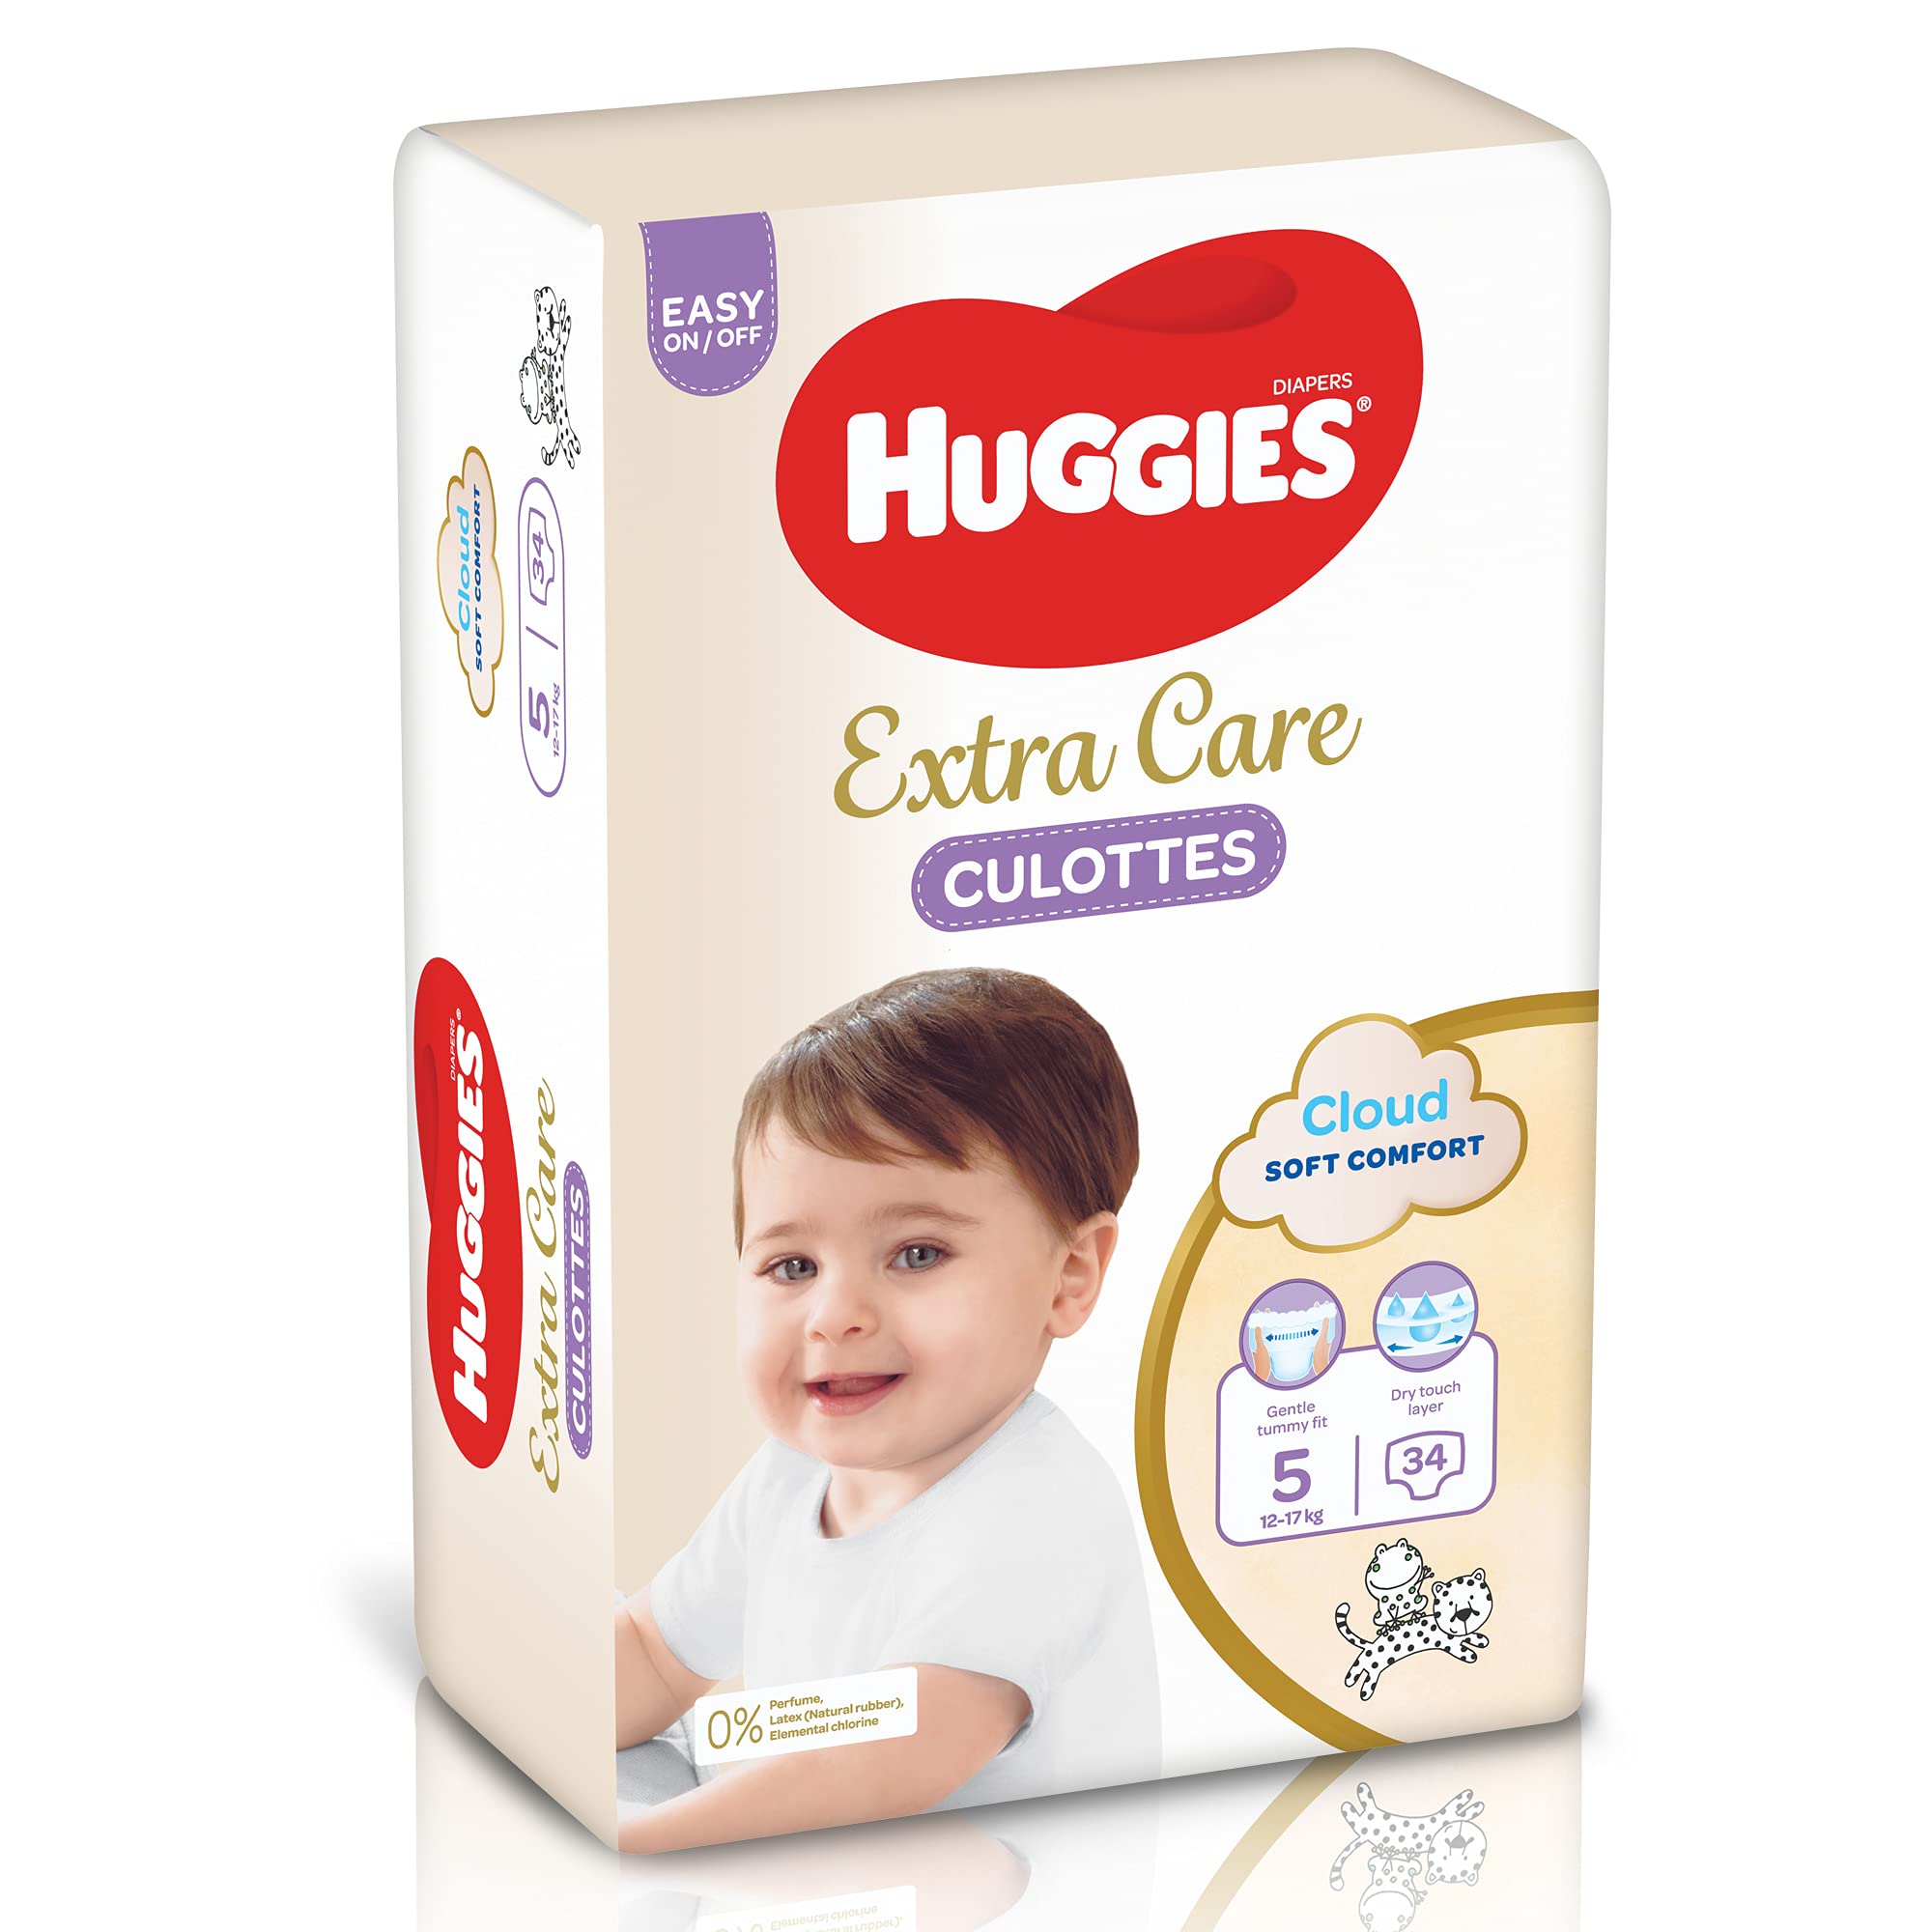 Huggies Extra Care Diaper Pants Size 5 12-17kg 34pcs حفاضات بانتي اكسترا كير من هاجيز، مقاس 5 الذي يناسب وزن 12-17 كجم، 34 قطعة